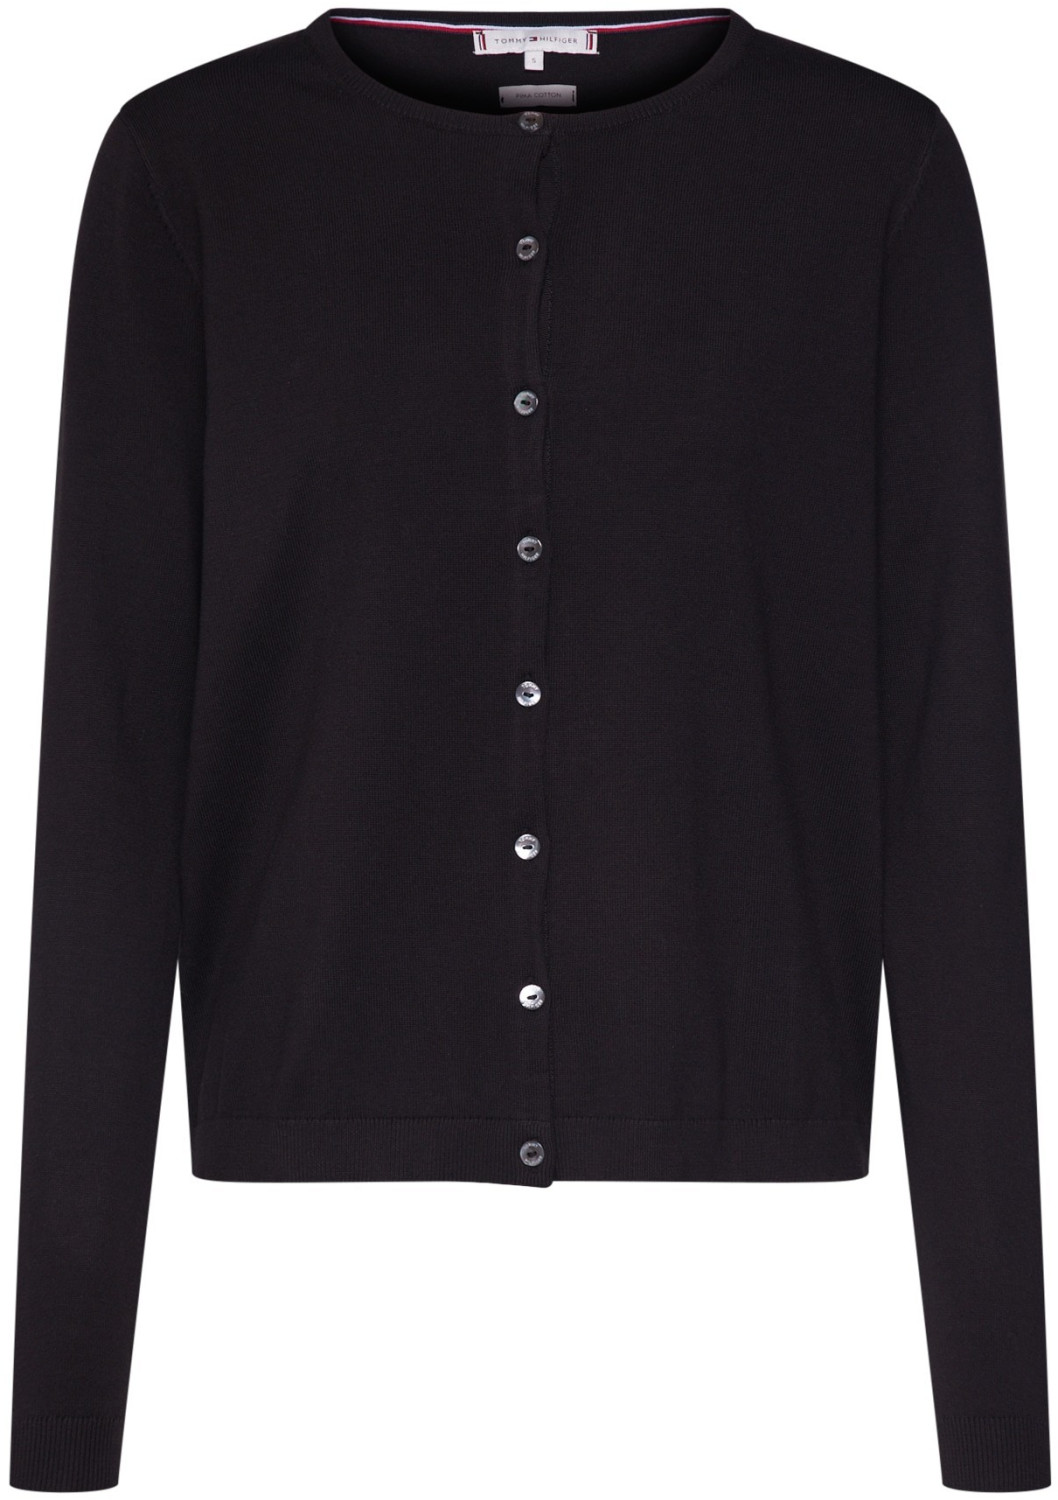 Buy Tommy Hilfiger Heritage Button-Up Cardigan (WW0WW22047) black from ...